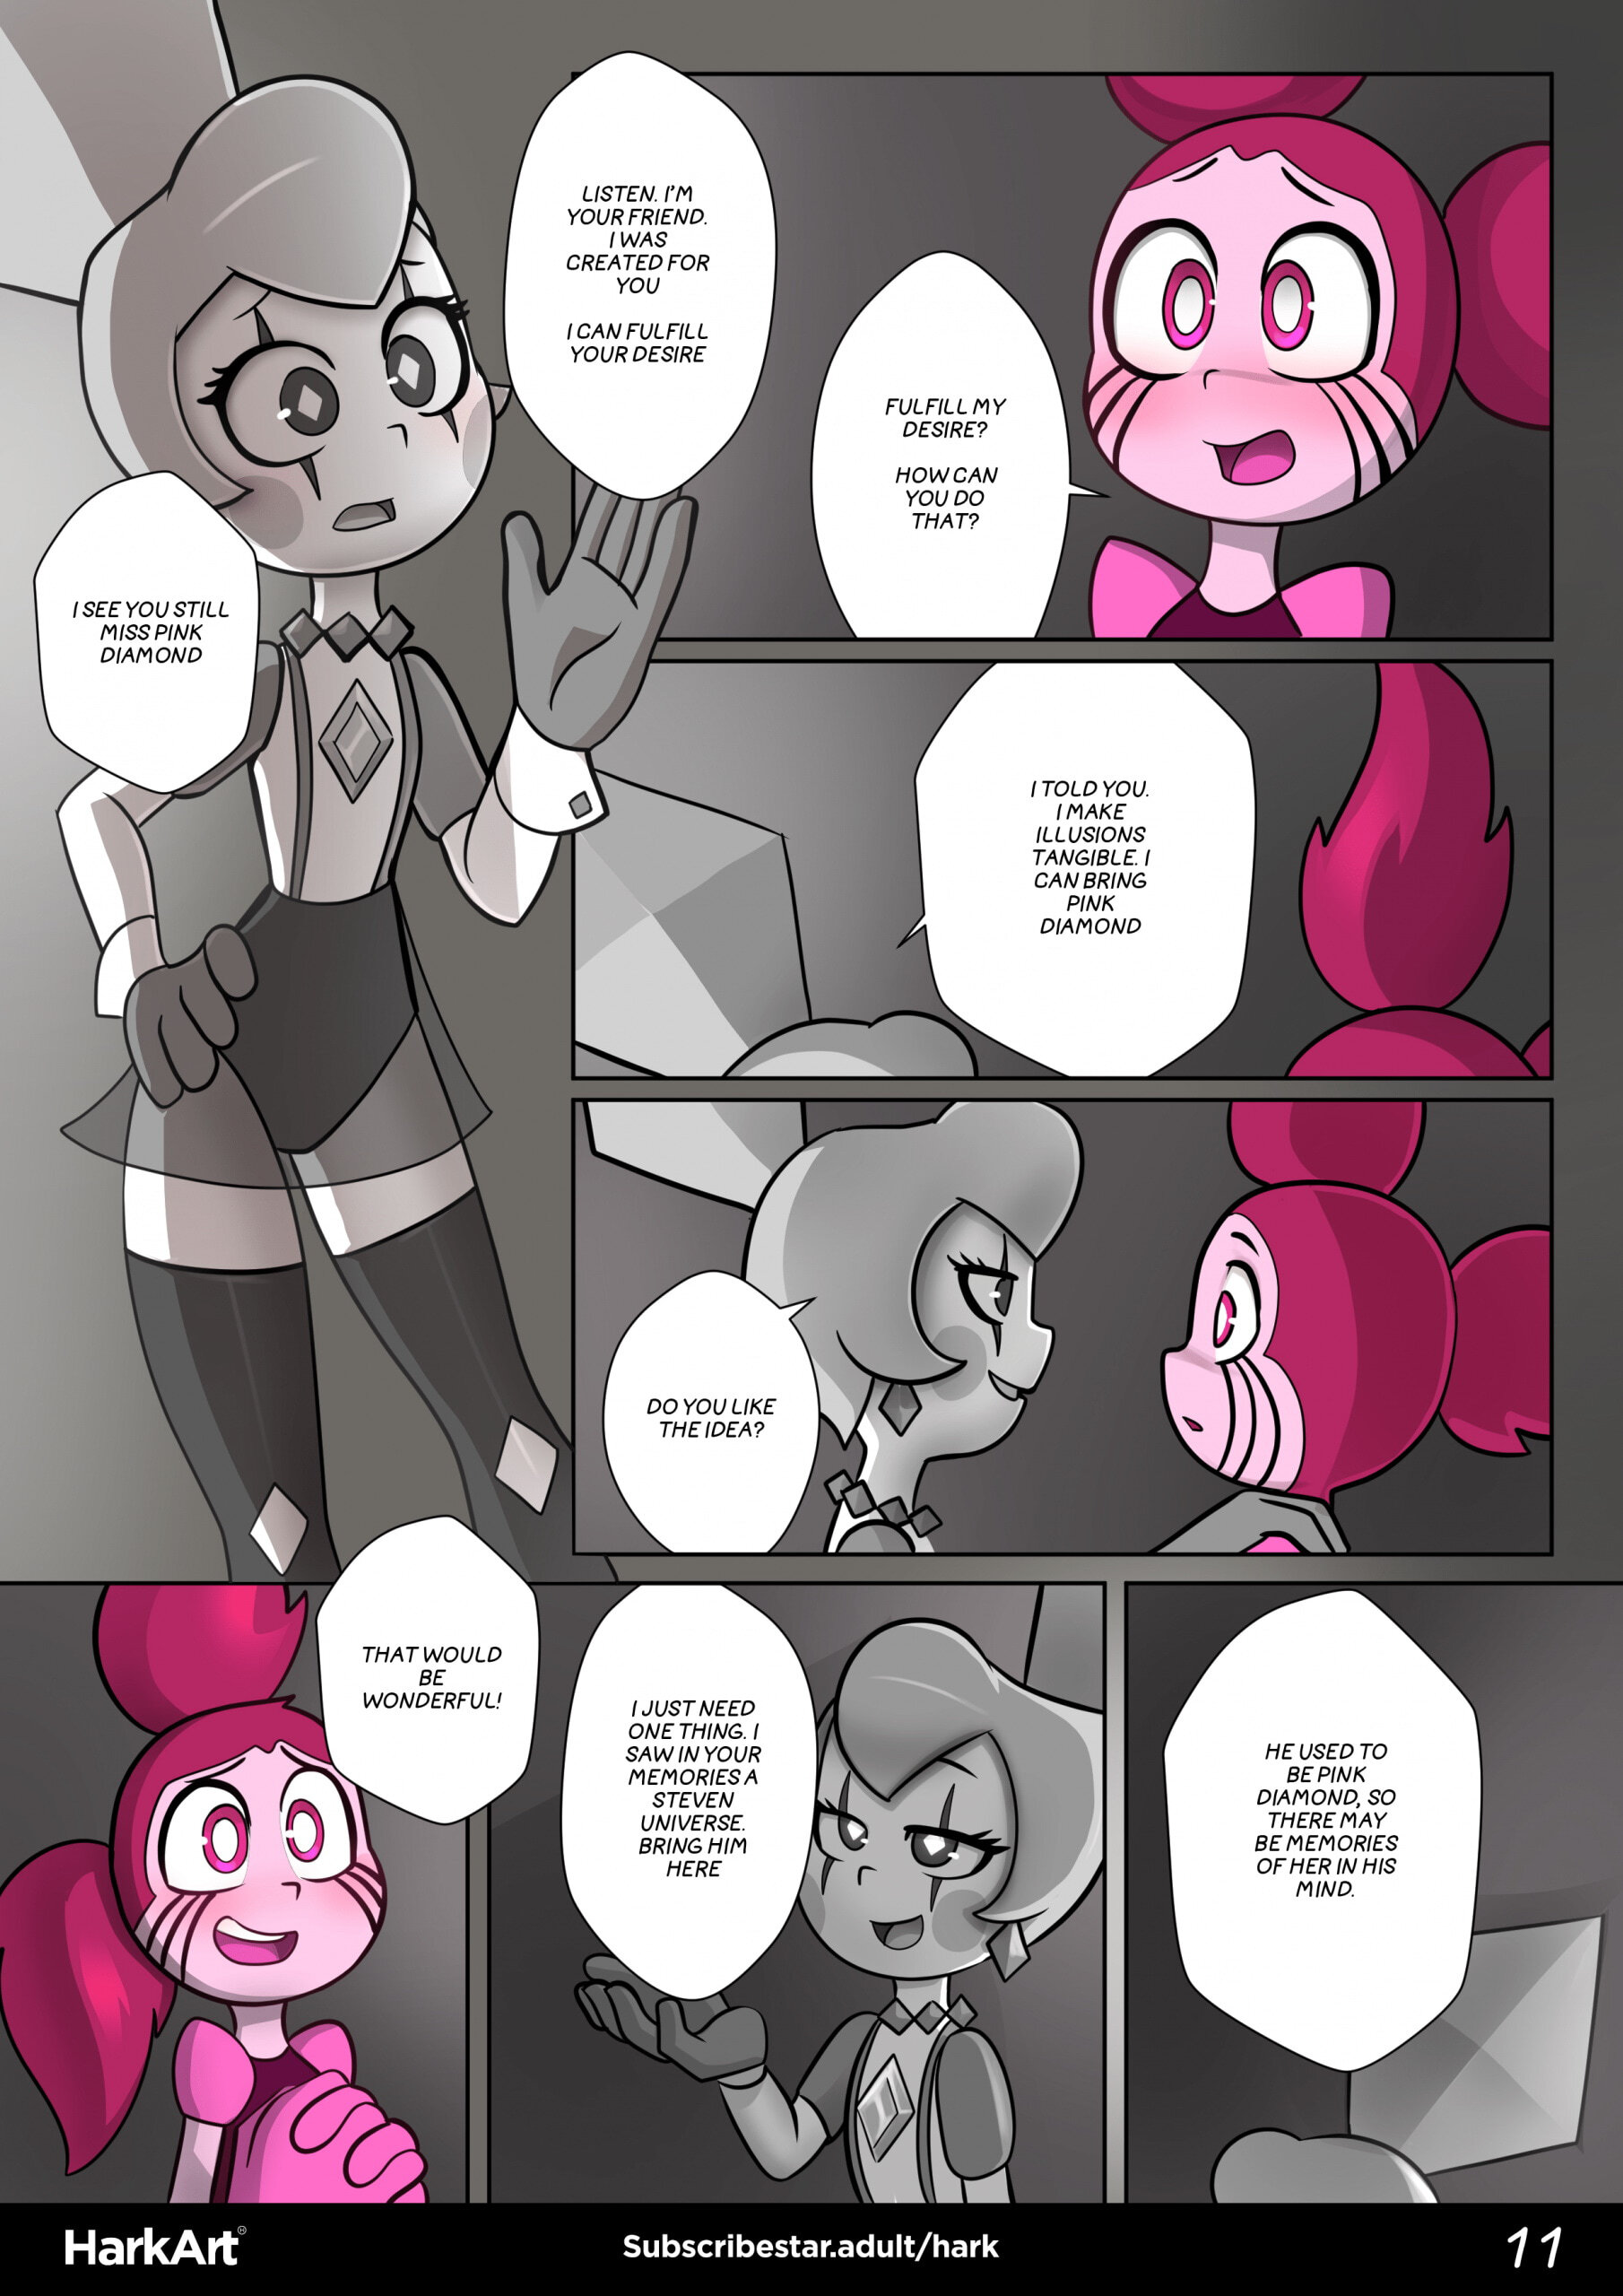 Steven's Desire - Page 12